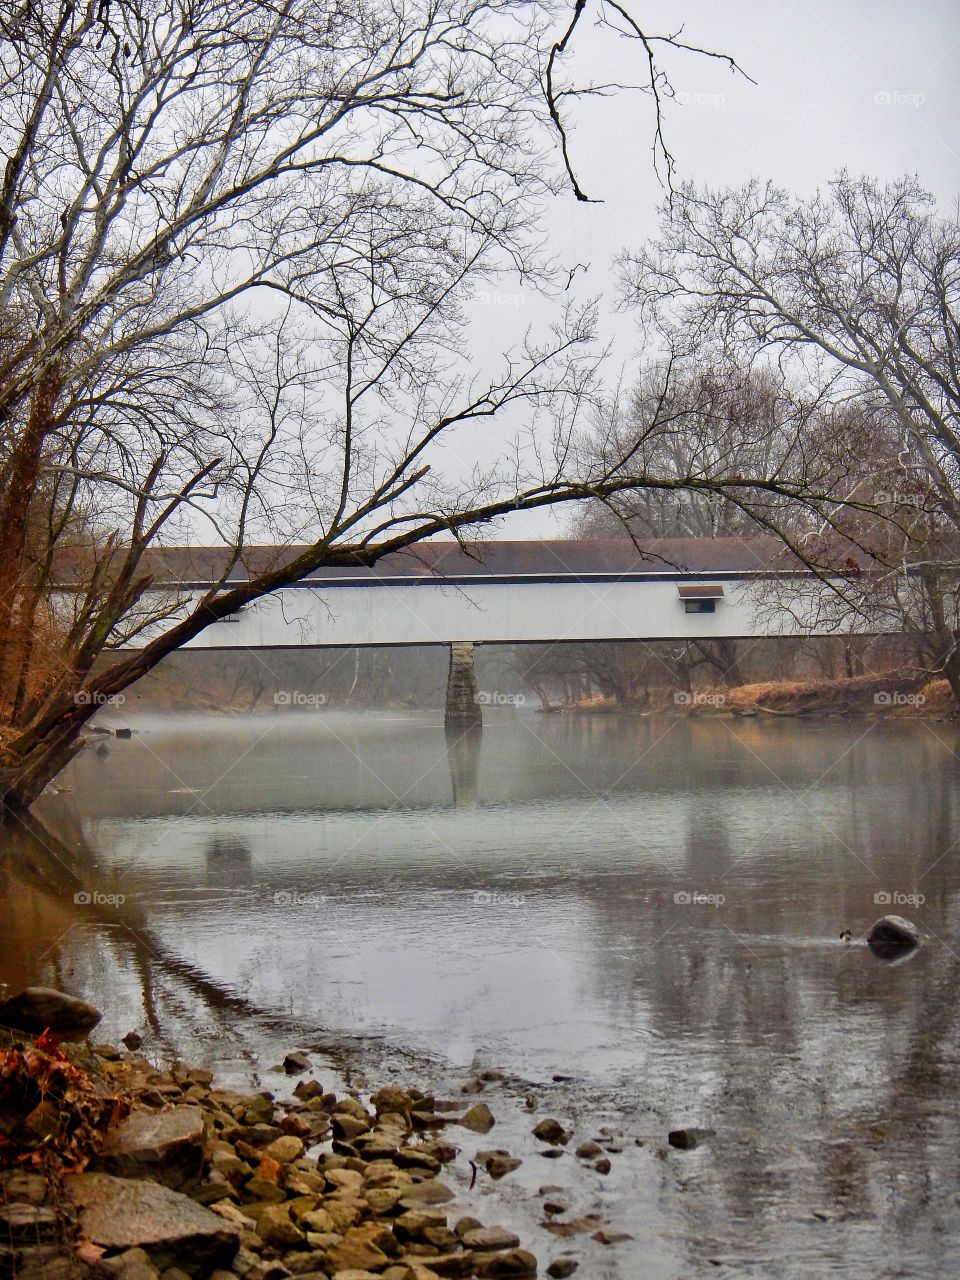 Foggy rainy day on the river. 